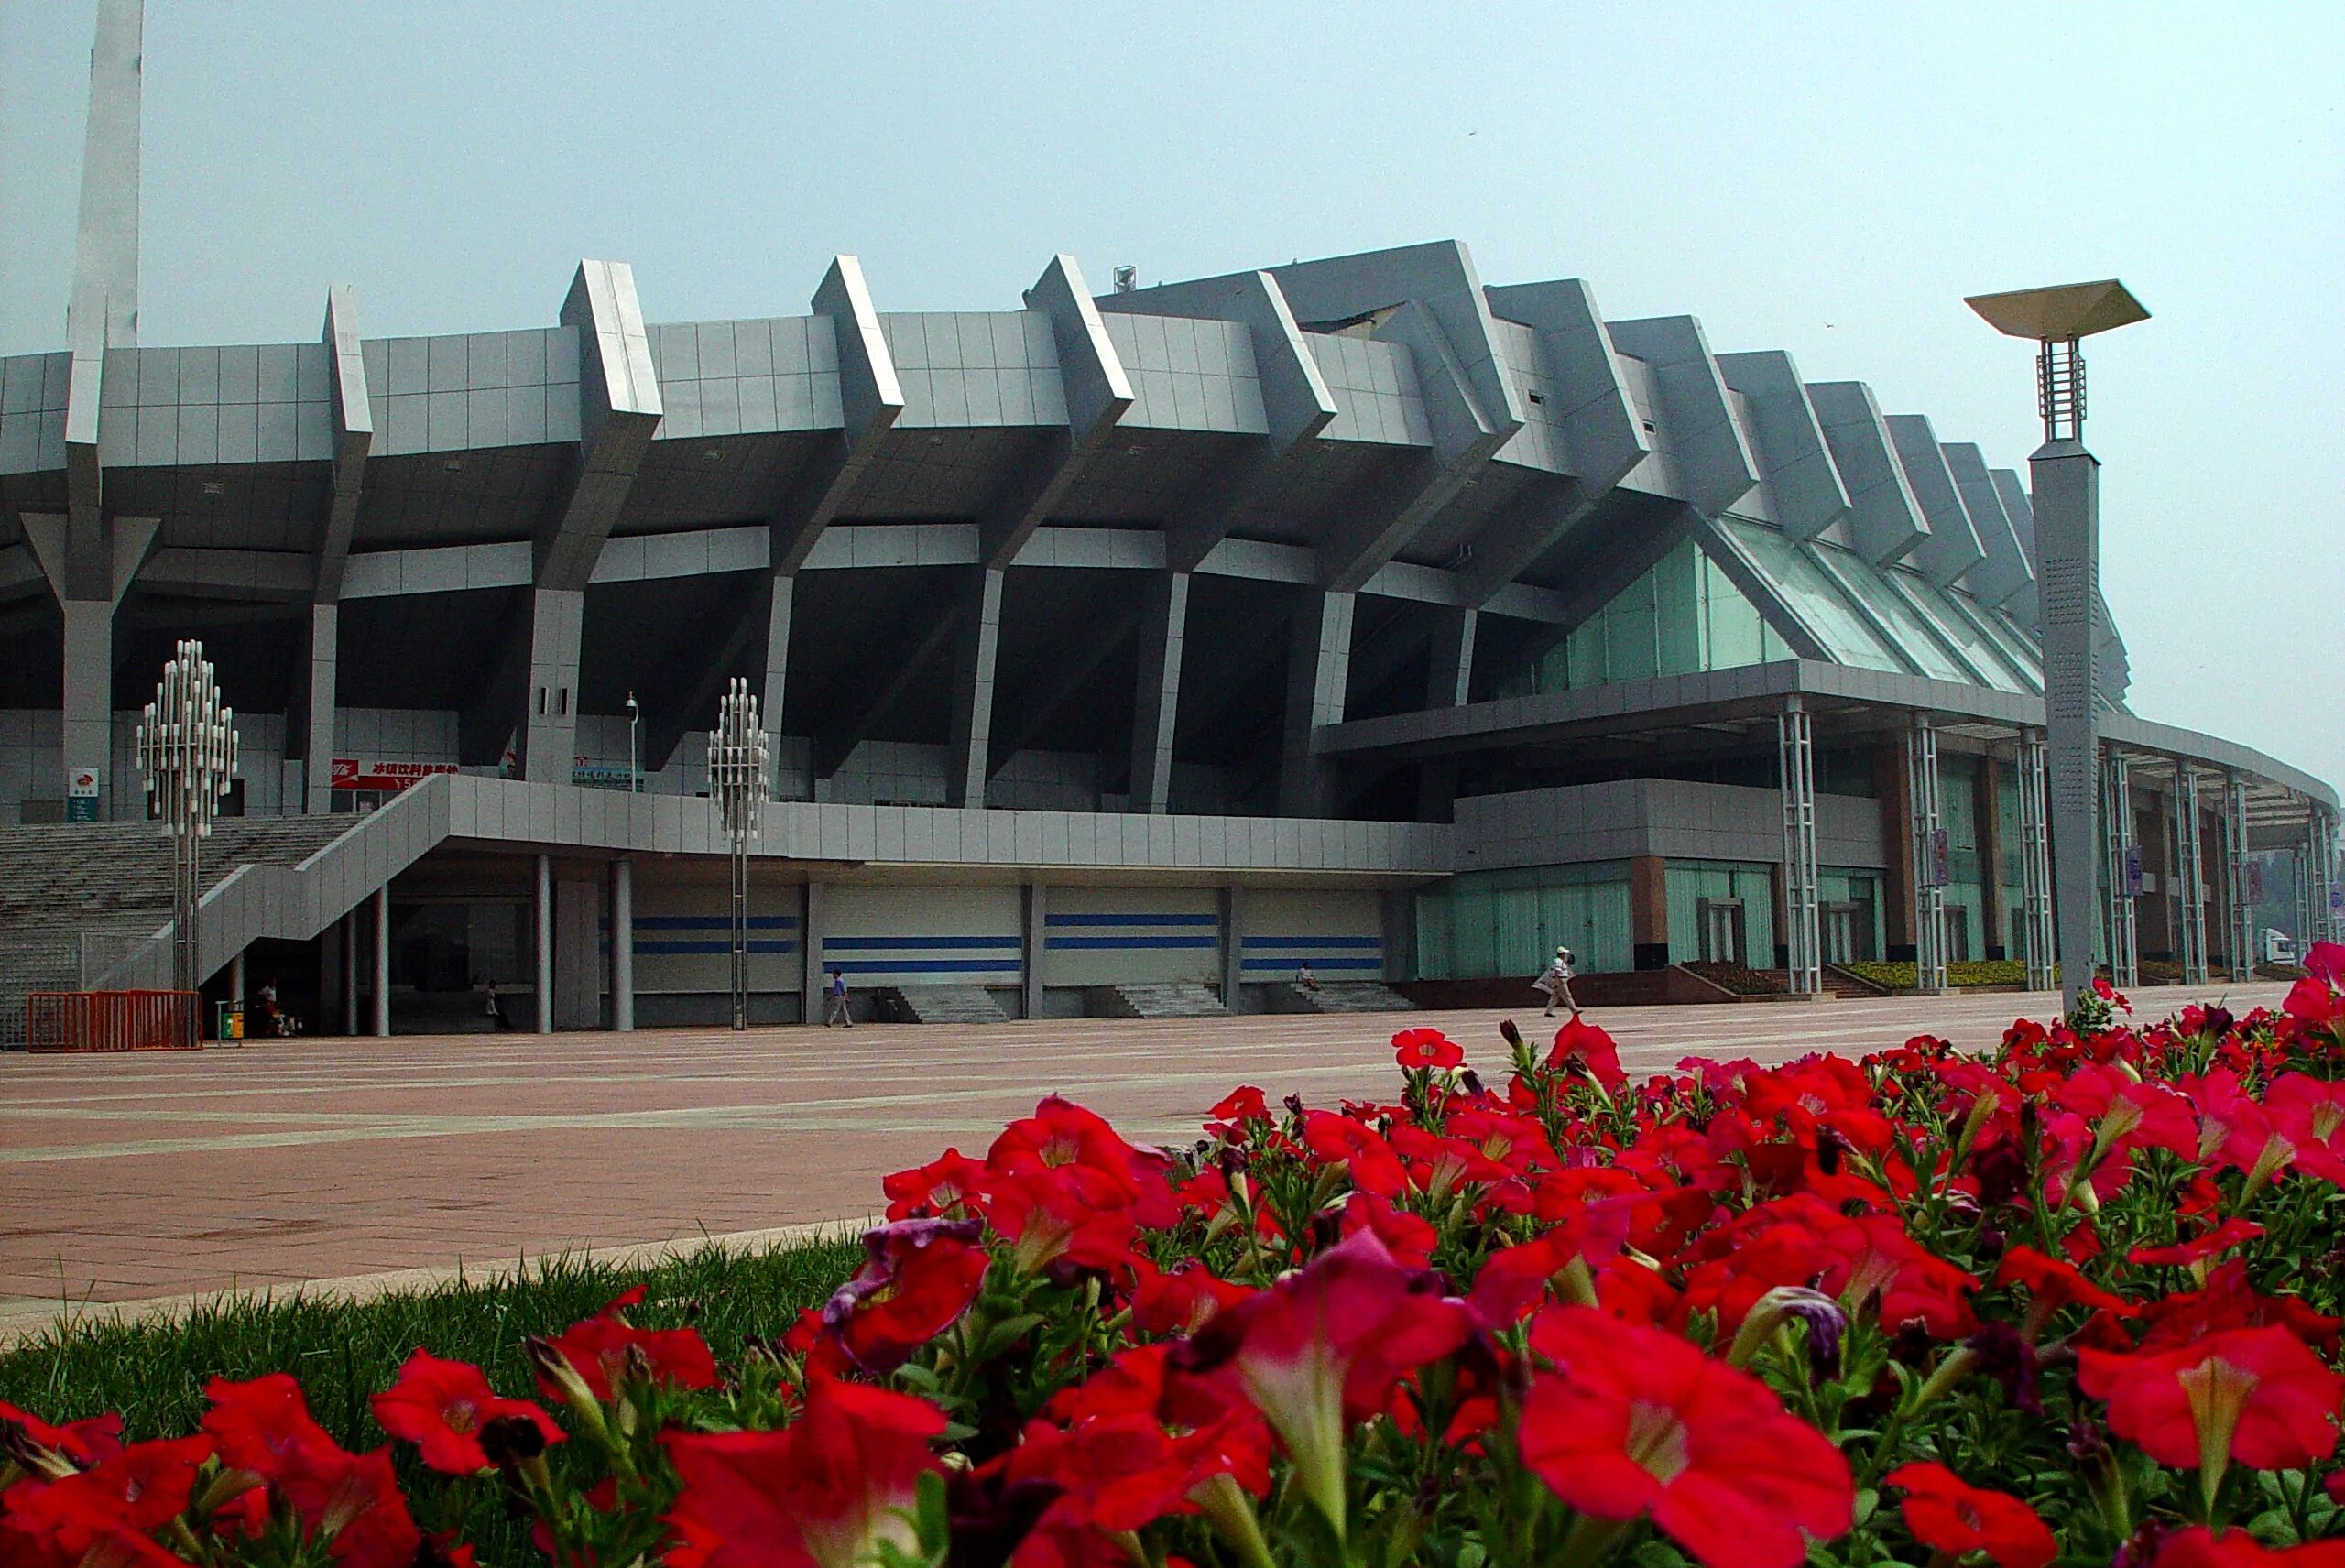 Shandong Sports Center. Цзинань Олимпик Спортс центр Стэдиум. Стадион Цзинани. Цзинаньский центр Олимпийских видов спорта (Цзинань).